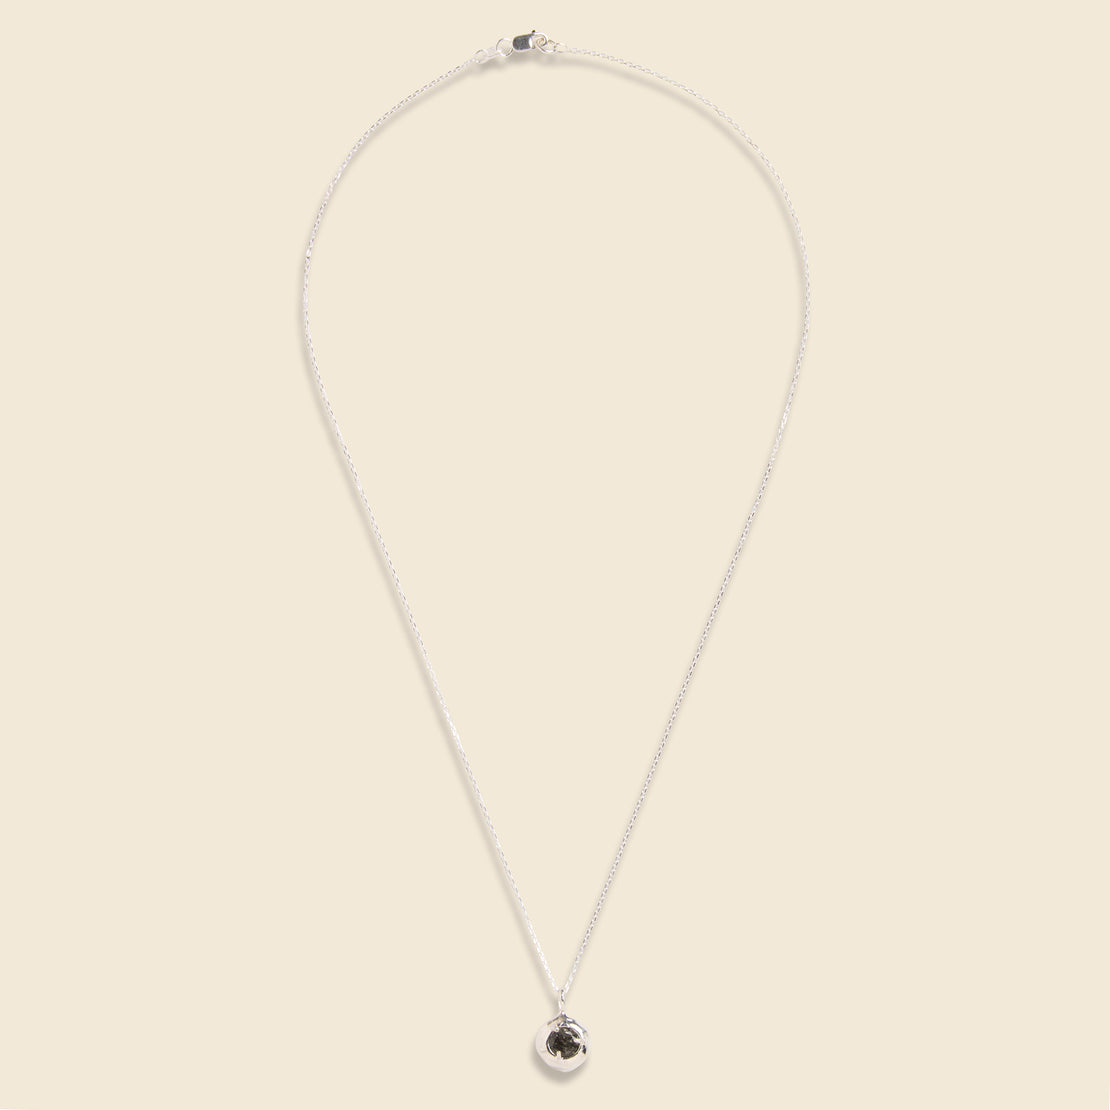 Keeper Necklace - Silver/Black Quartz - Amanda Hunt - STAG Provisions - W - Accessories - Necklace